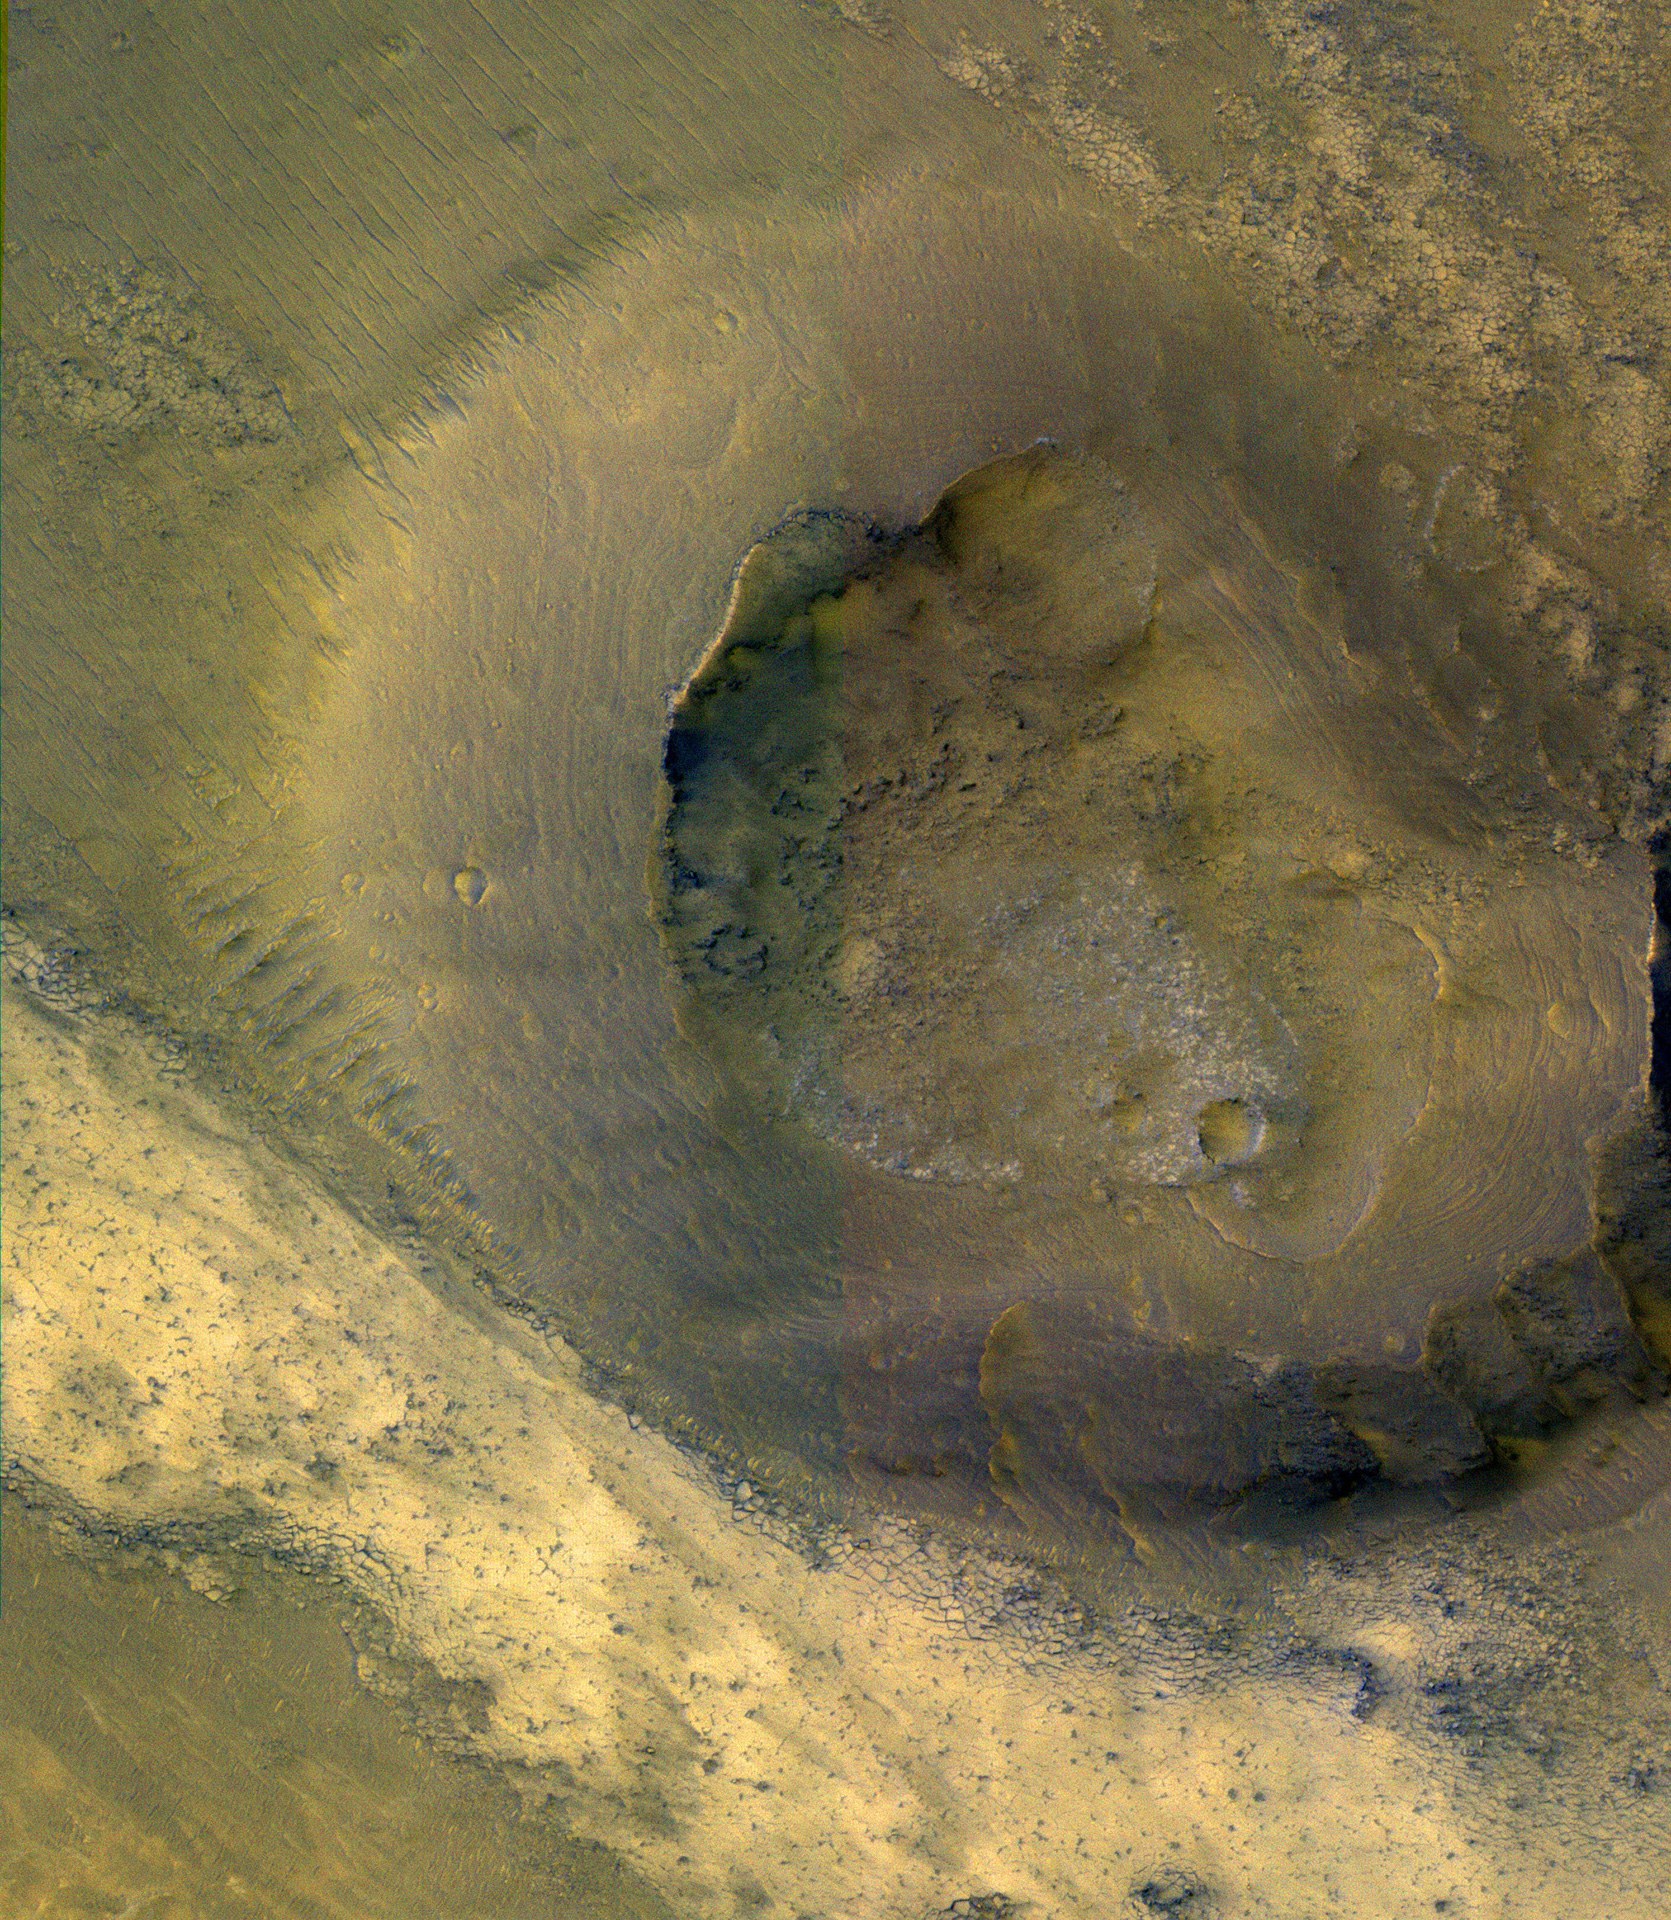 A mud volcano on Mars?